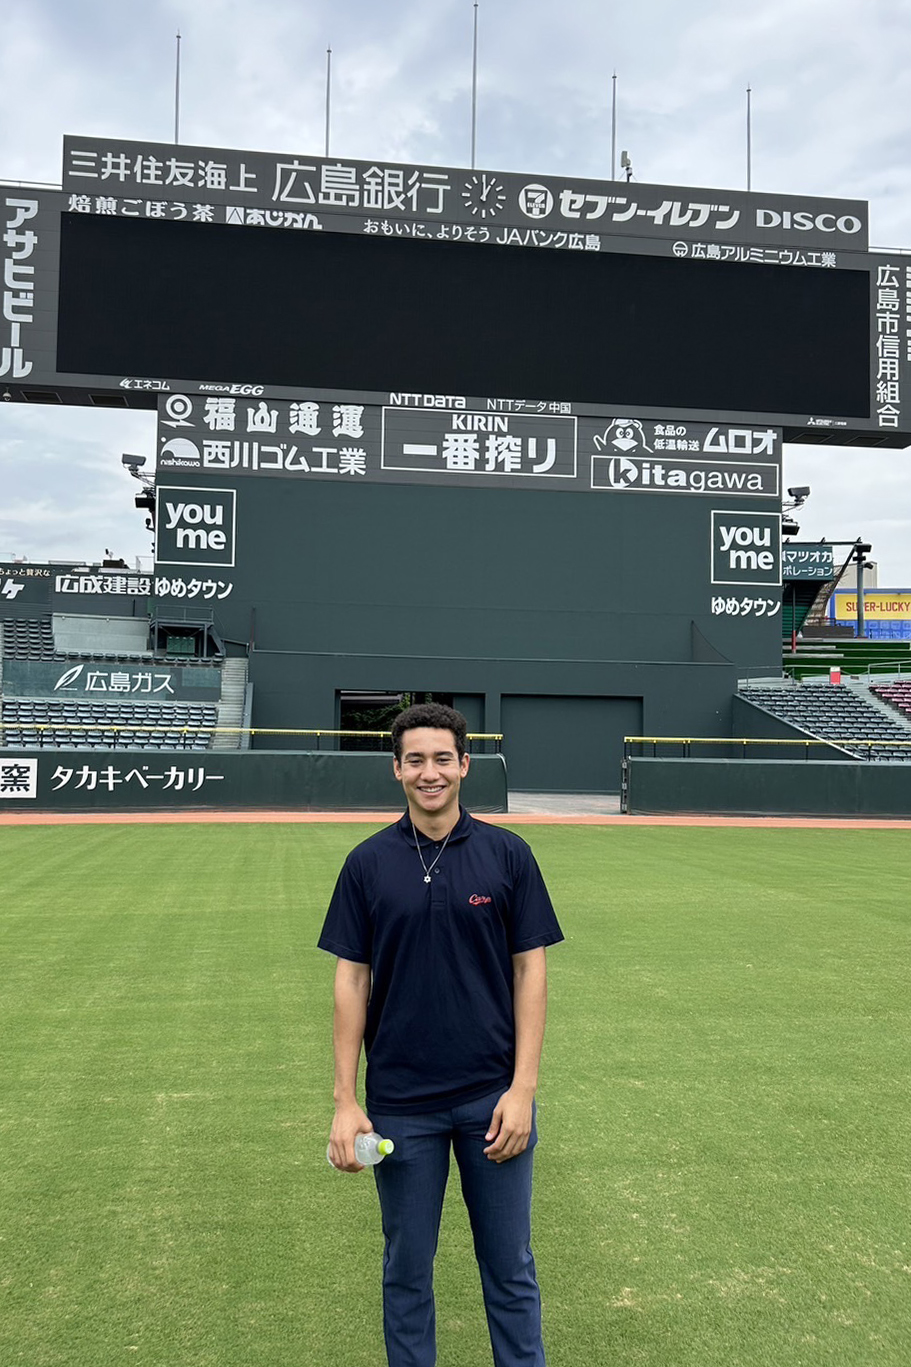 Reece Calvin on a Japanese baseball field. The board behind says "Hiroshima".